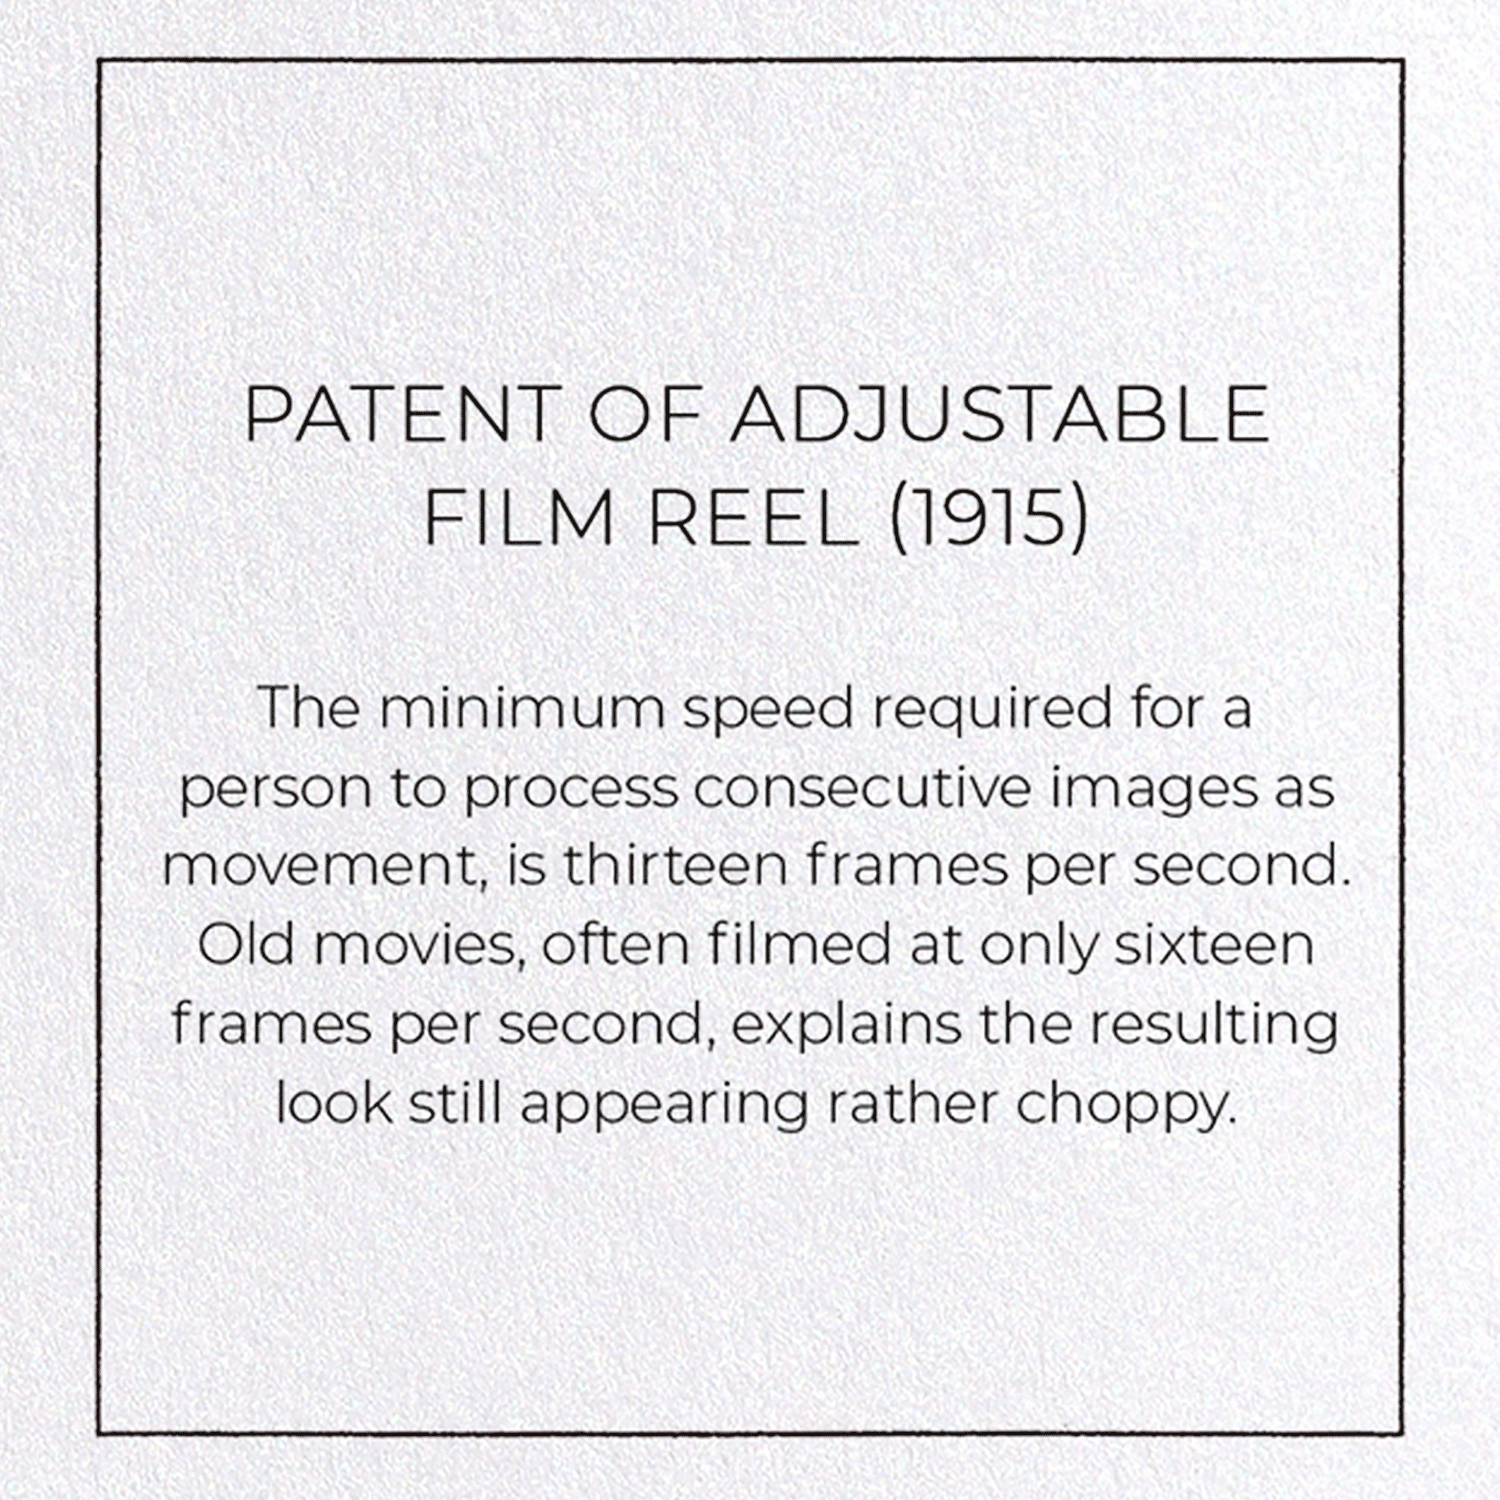 PATENT OF ADJUSTABLE FILM REEL (1915)